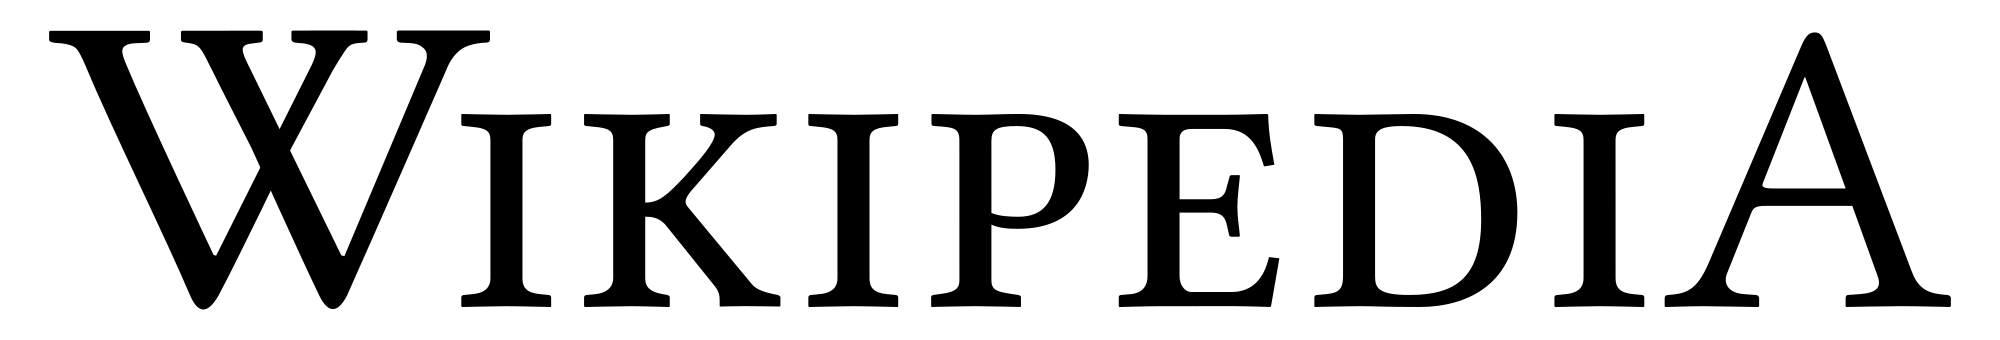 Wikipedia Logo Transparent Background PNG